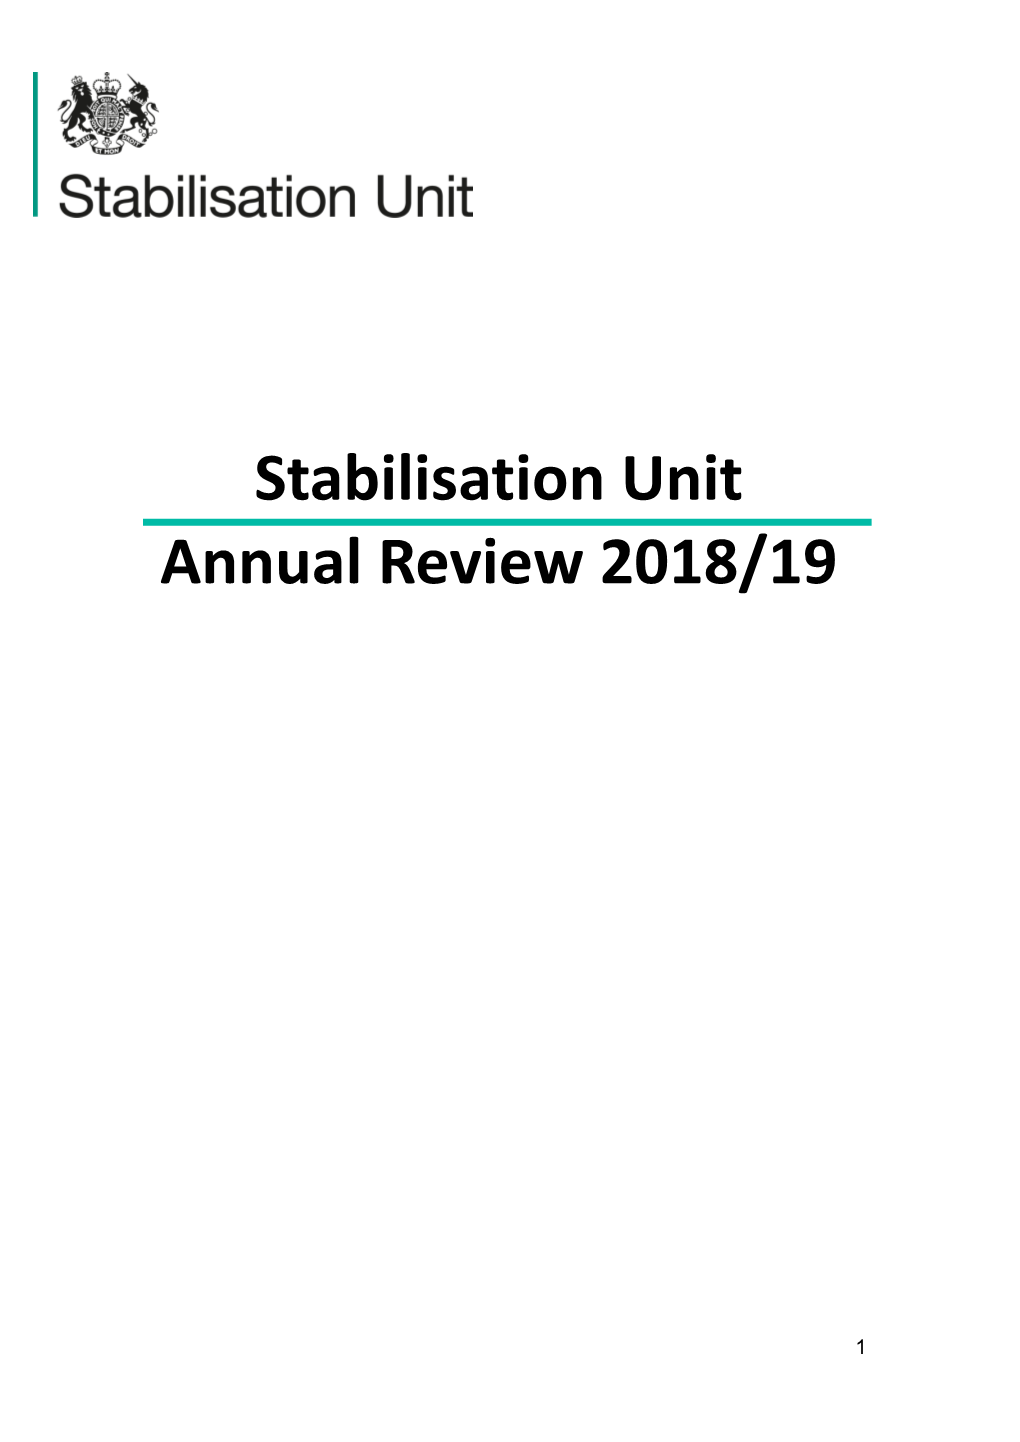 Stabilisation Unit Annual Review 2018/19